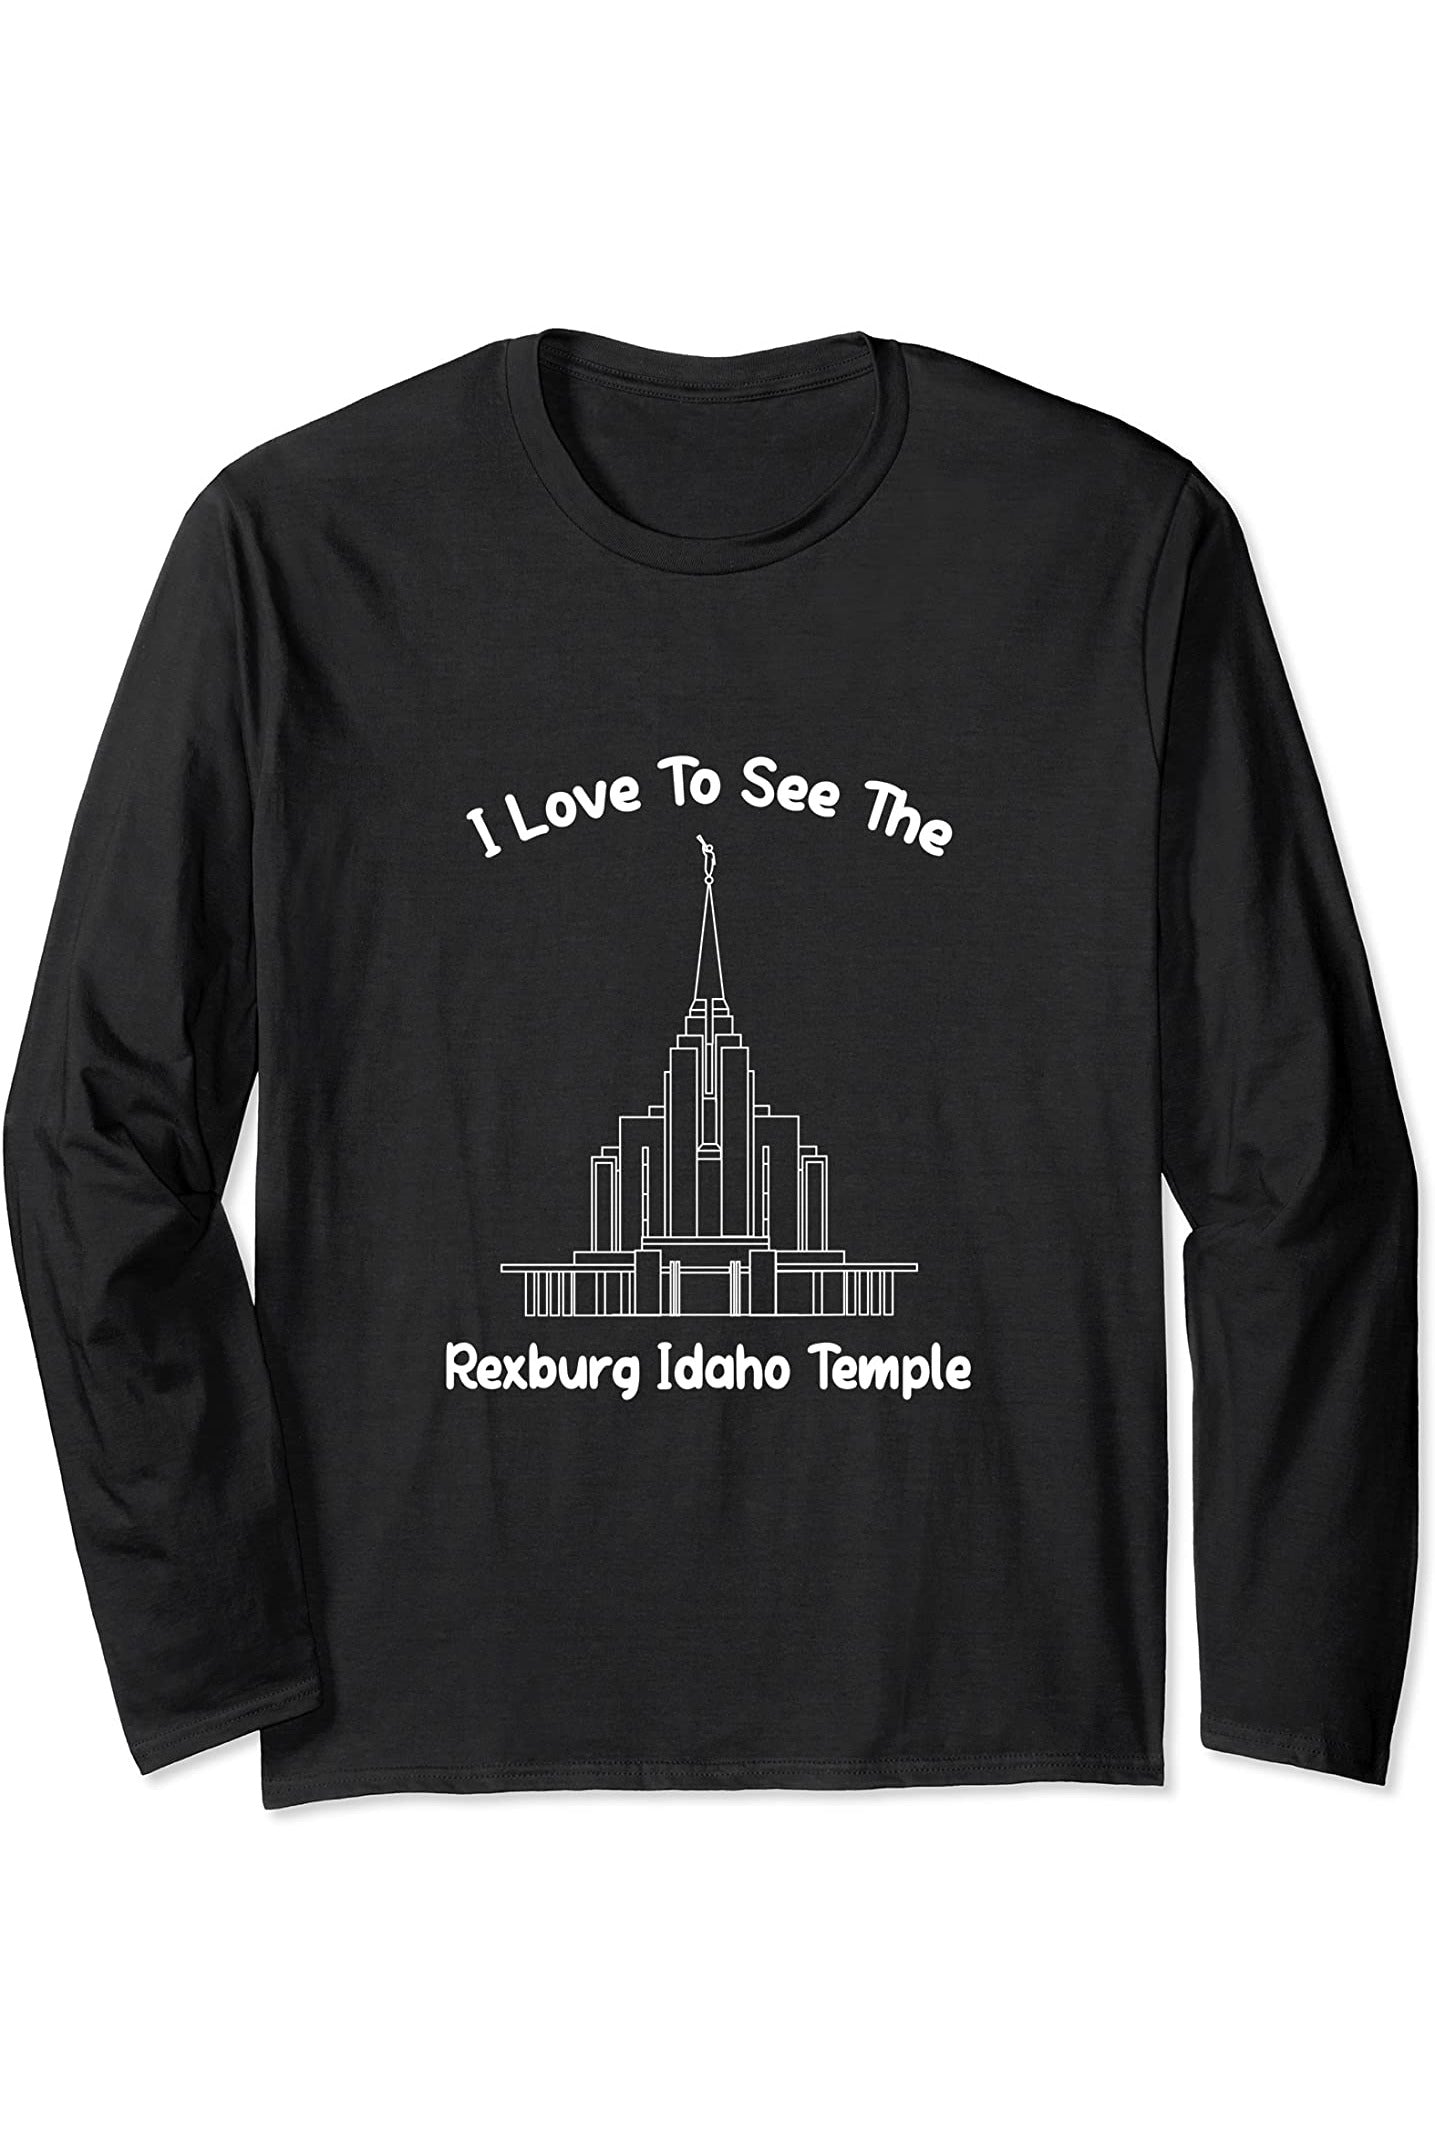 Rexburg Idaho Temple Long Sleeve T-Shirt - Primary Style (English) US